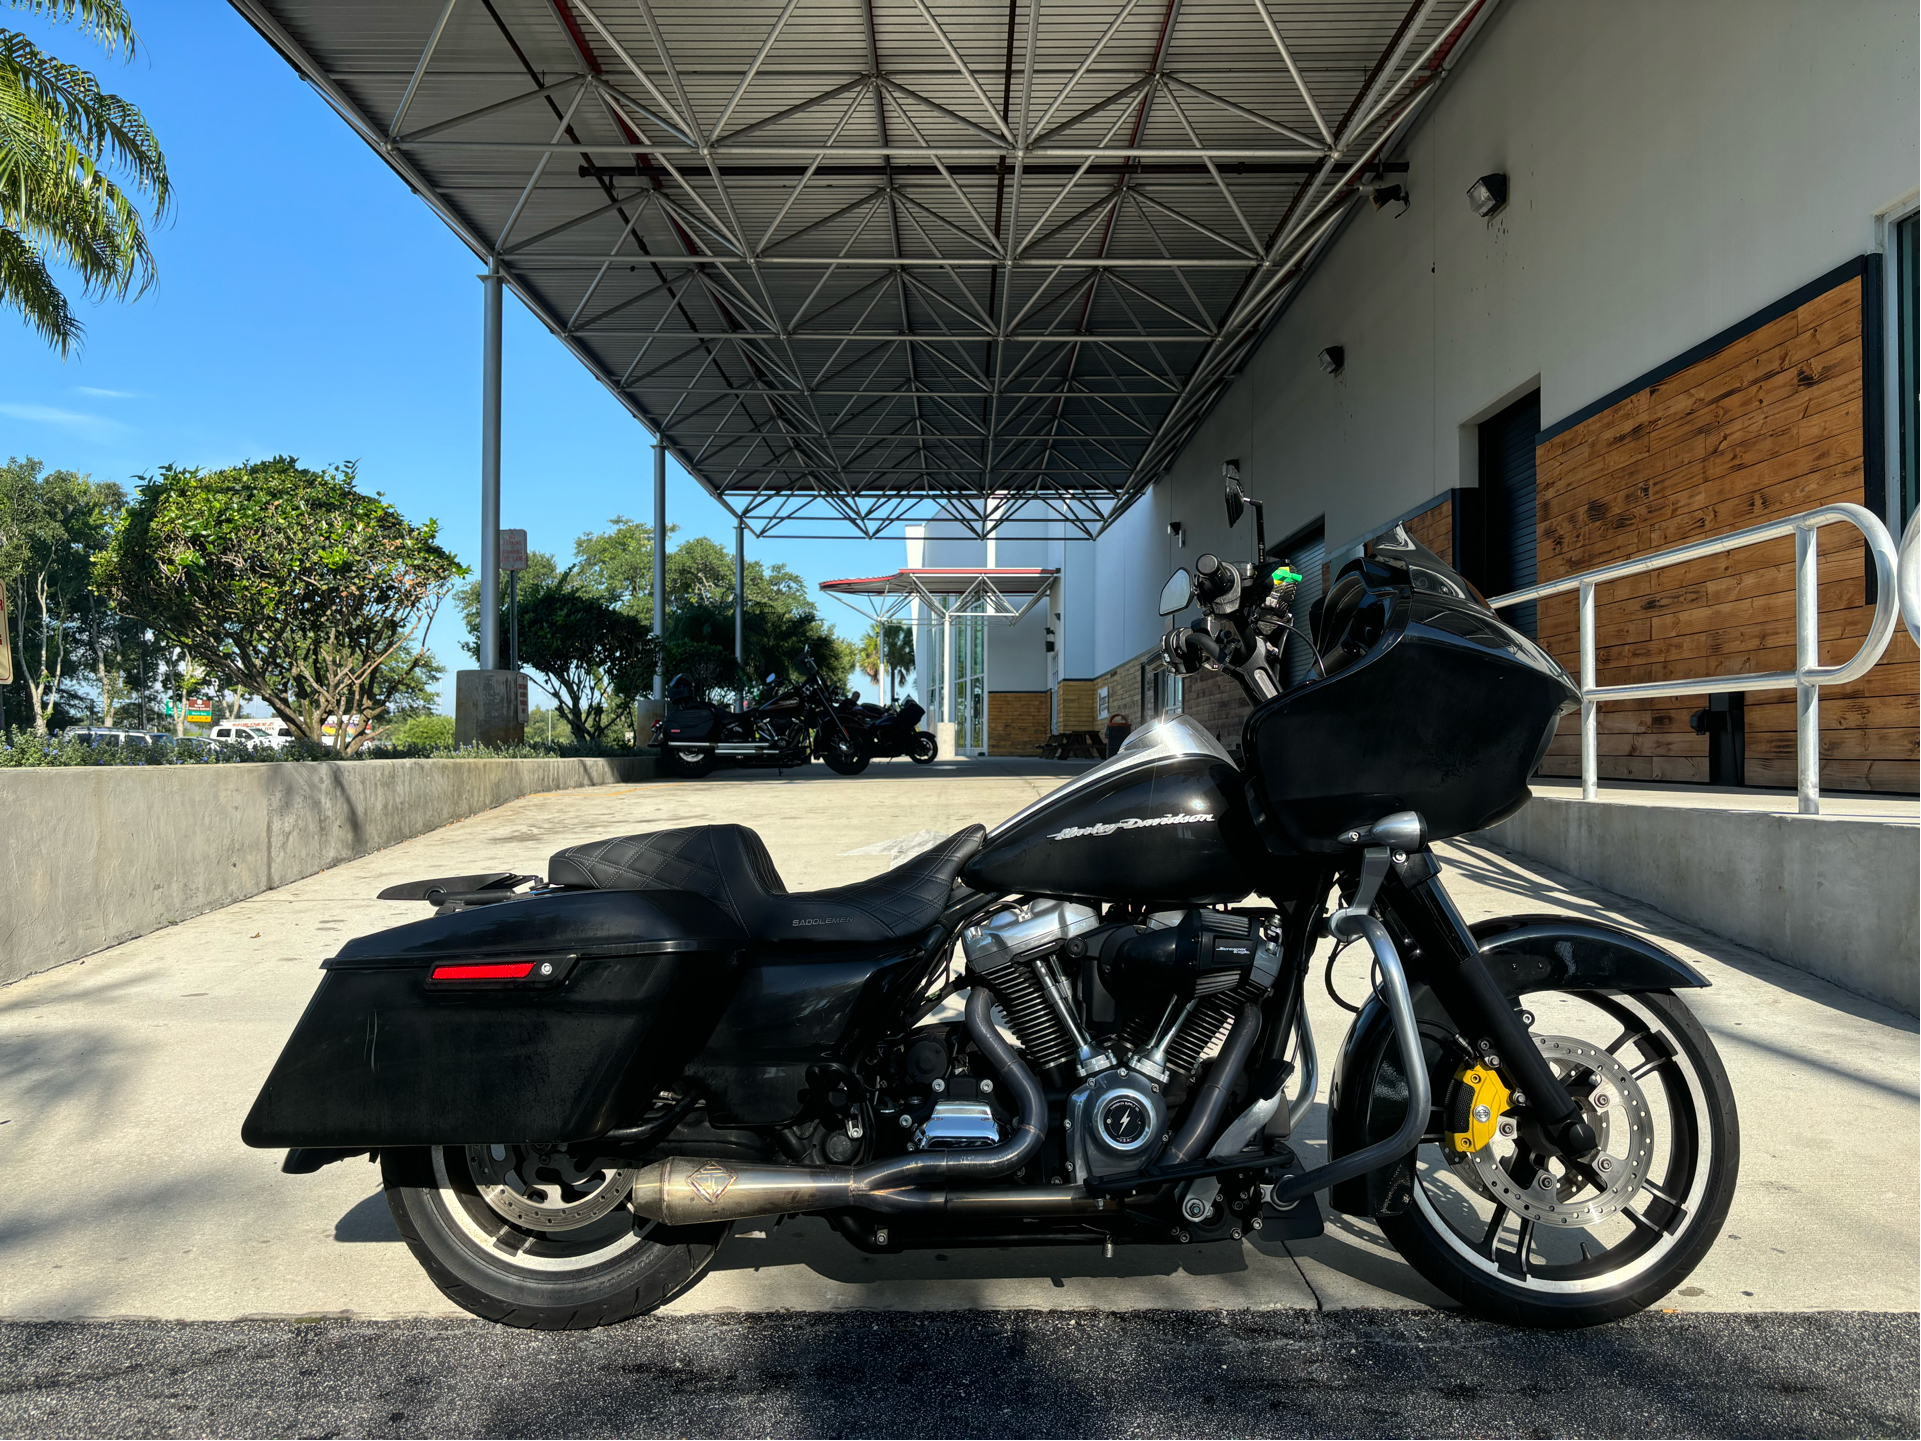 2017 Harley-Davidson Road Glide® Special in Sanford, Florida - Photo 1